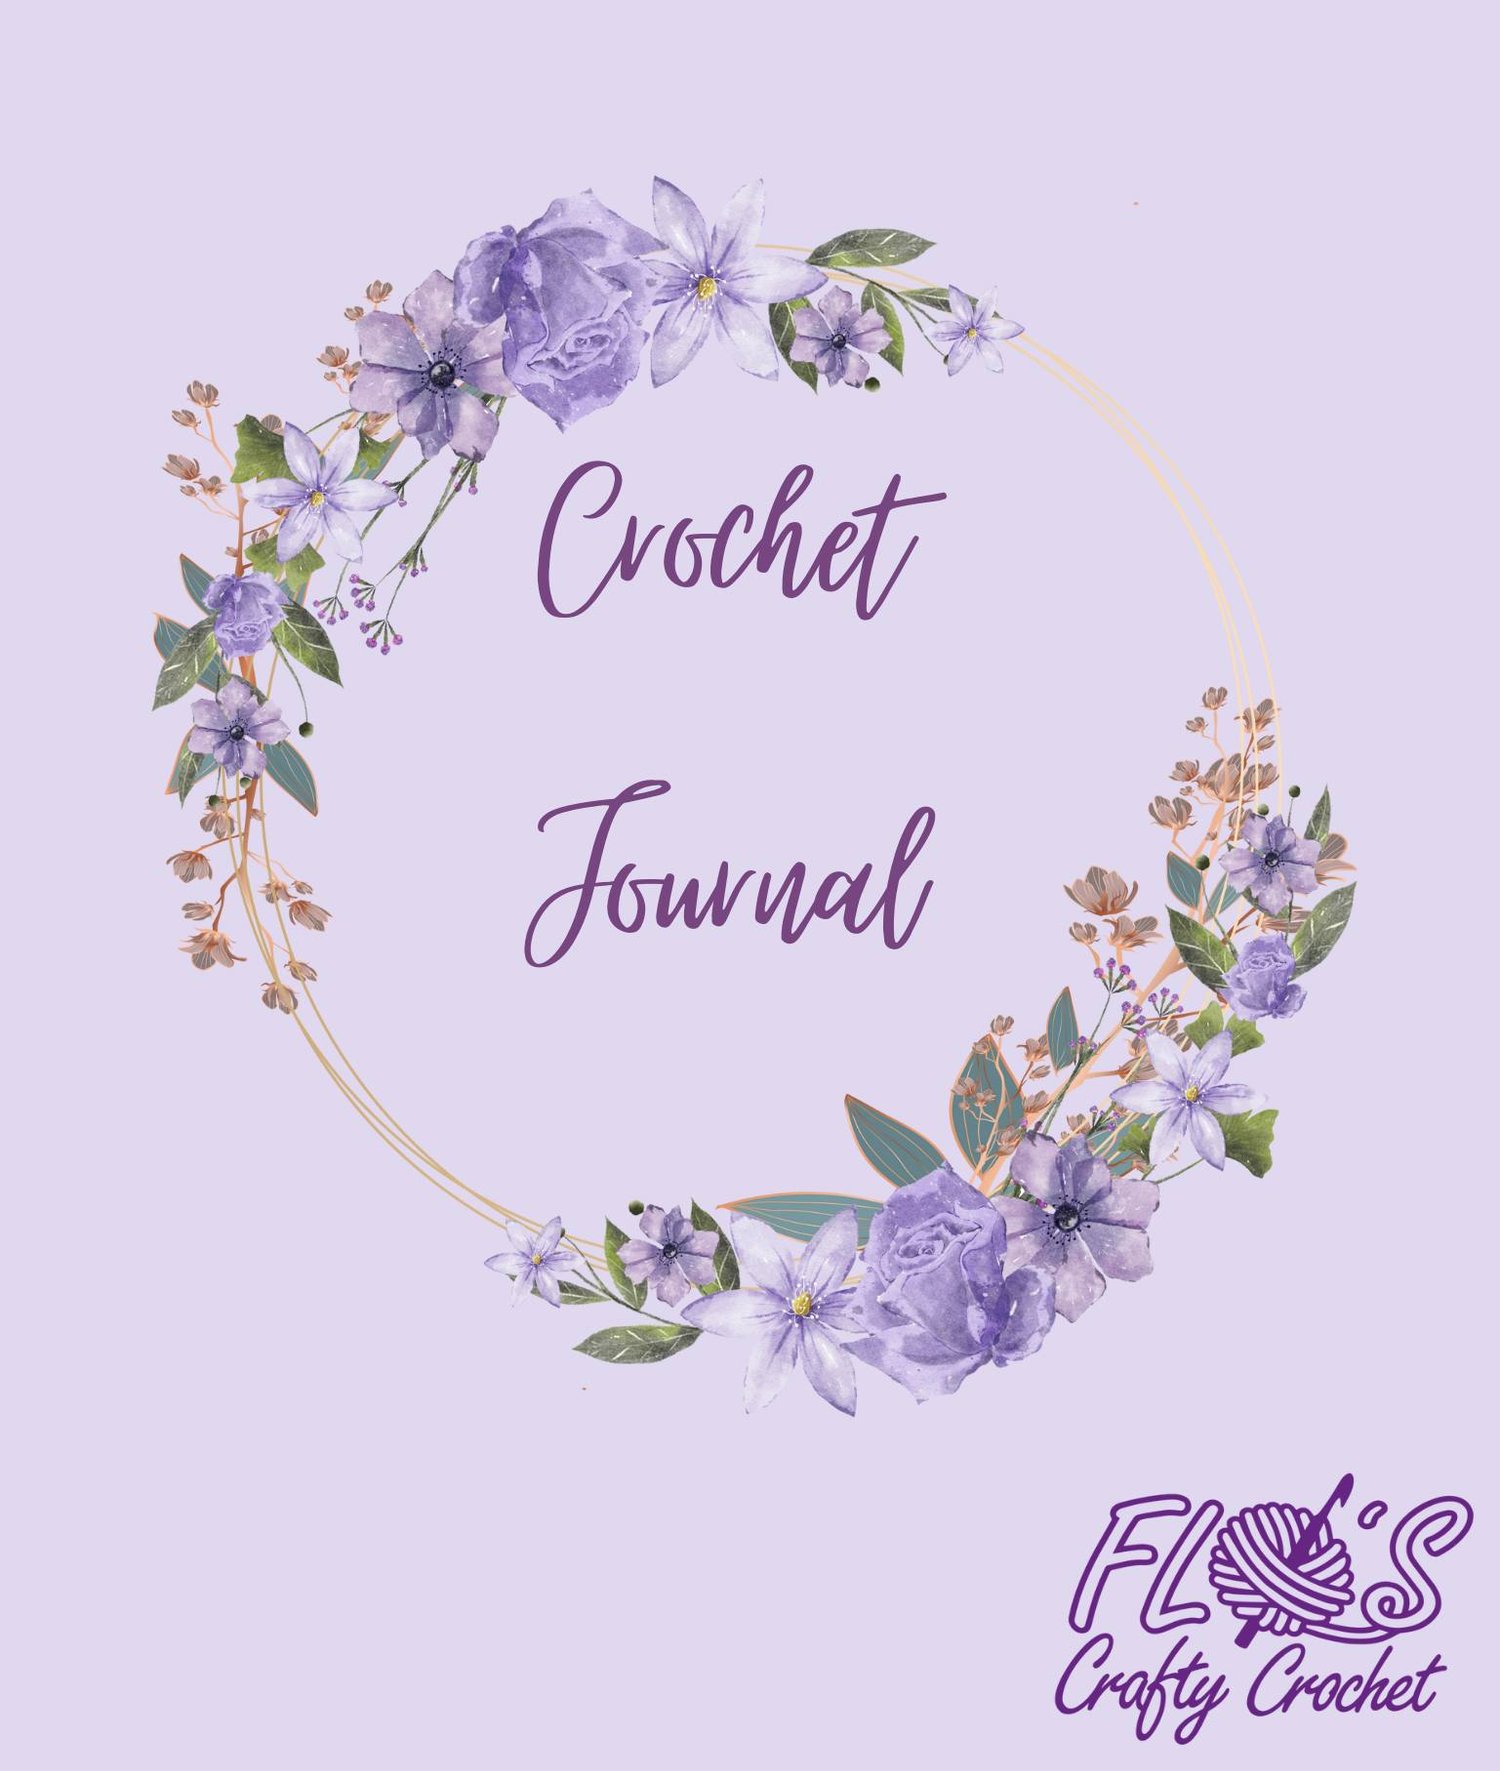 Crochet journal — Flo's Crafty Crochet